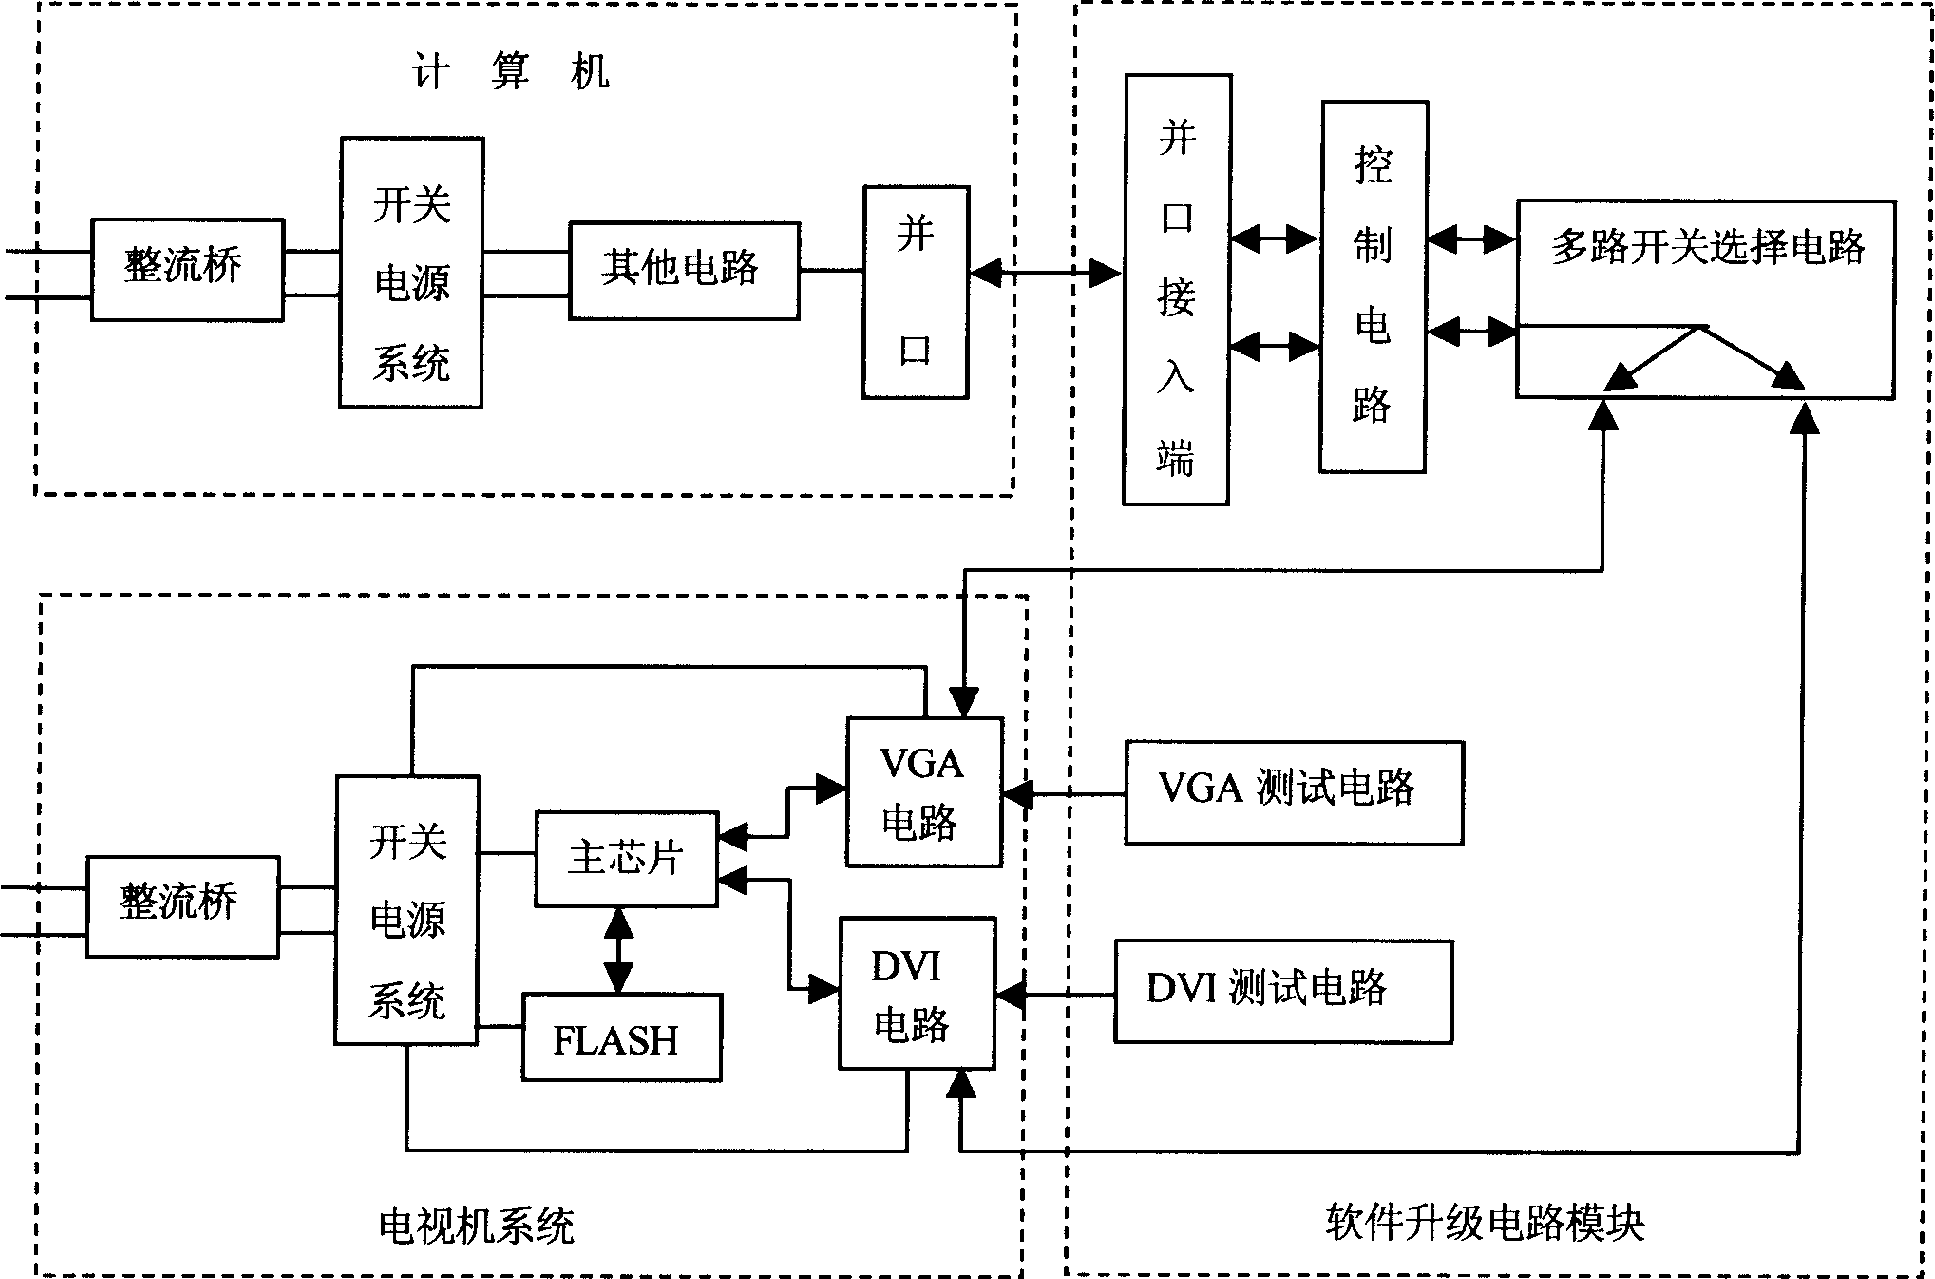 Software upgrading circuit module of TV set